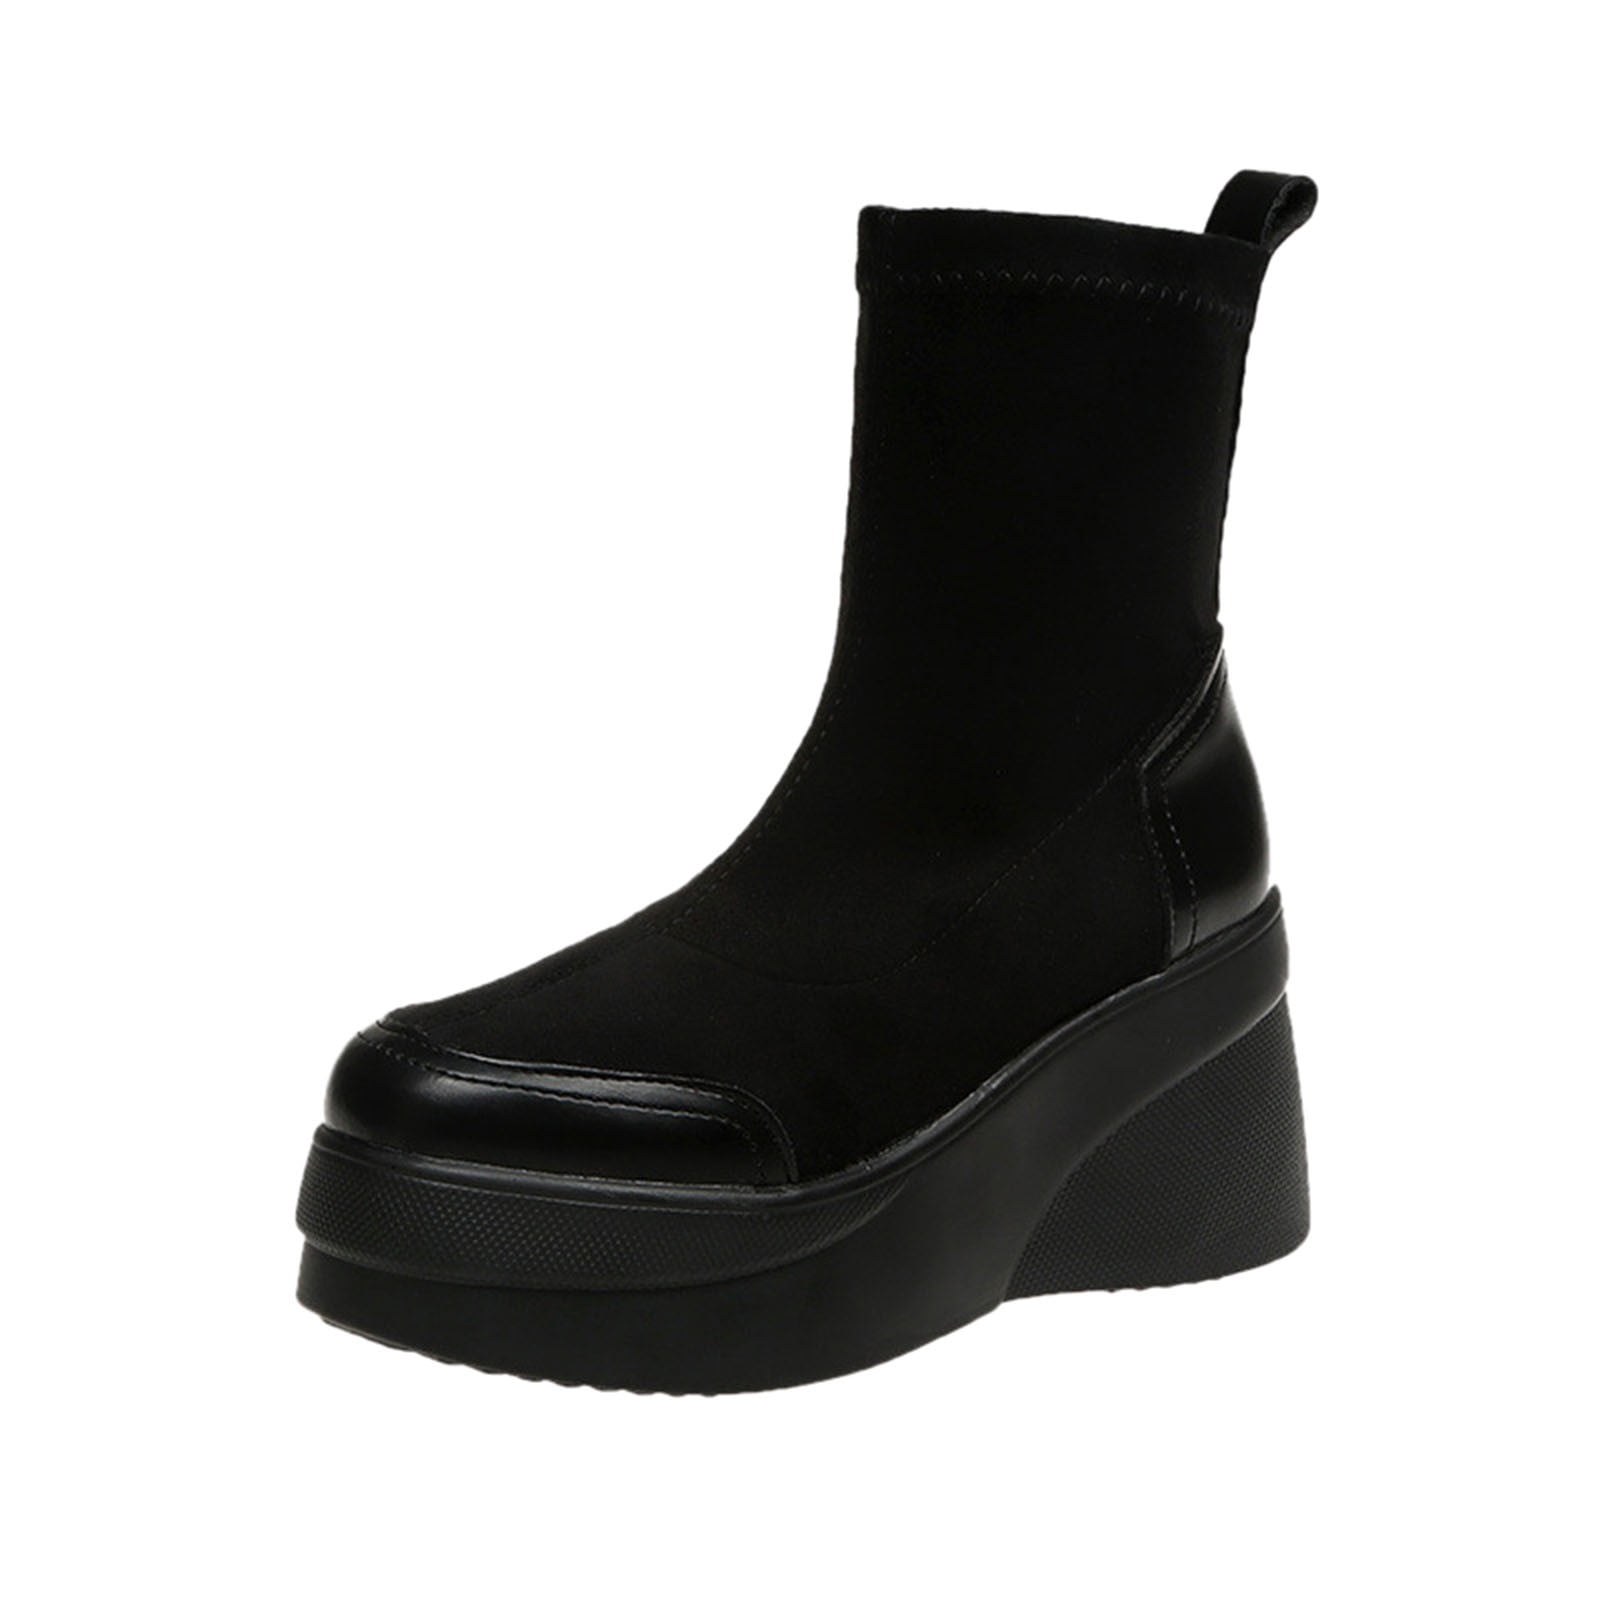 NN Ankle Boots For Women Low Heel,Women's Work Waterproof Hiking Combat ...